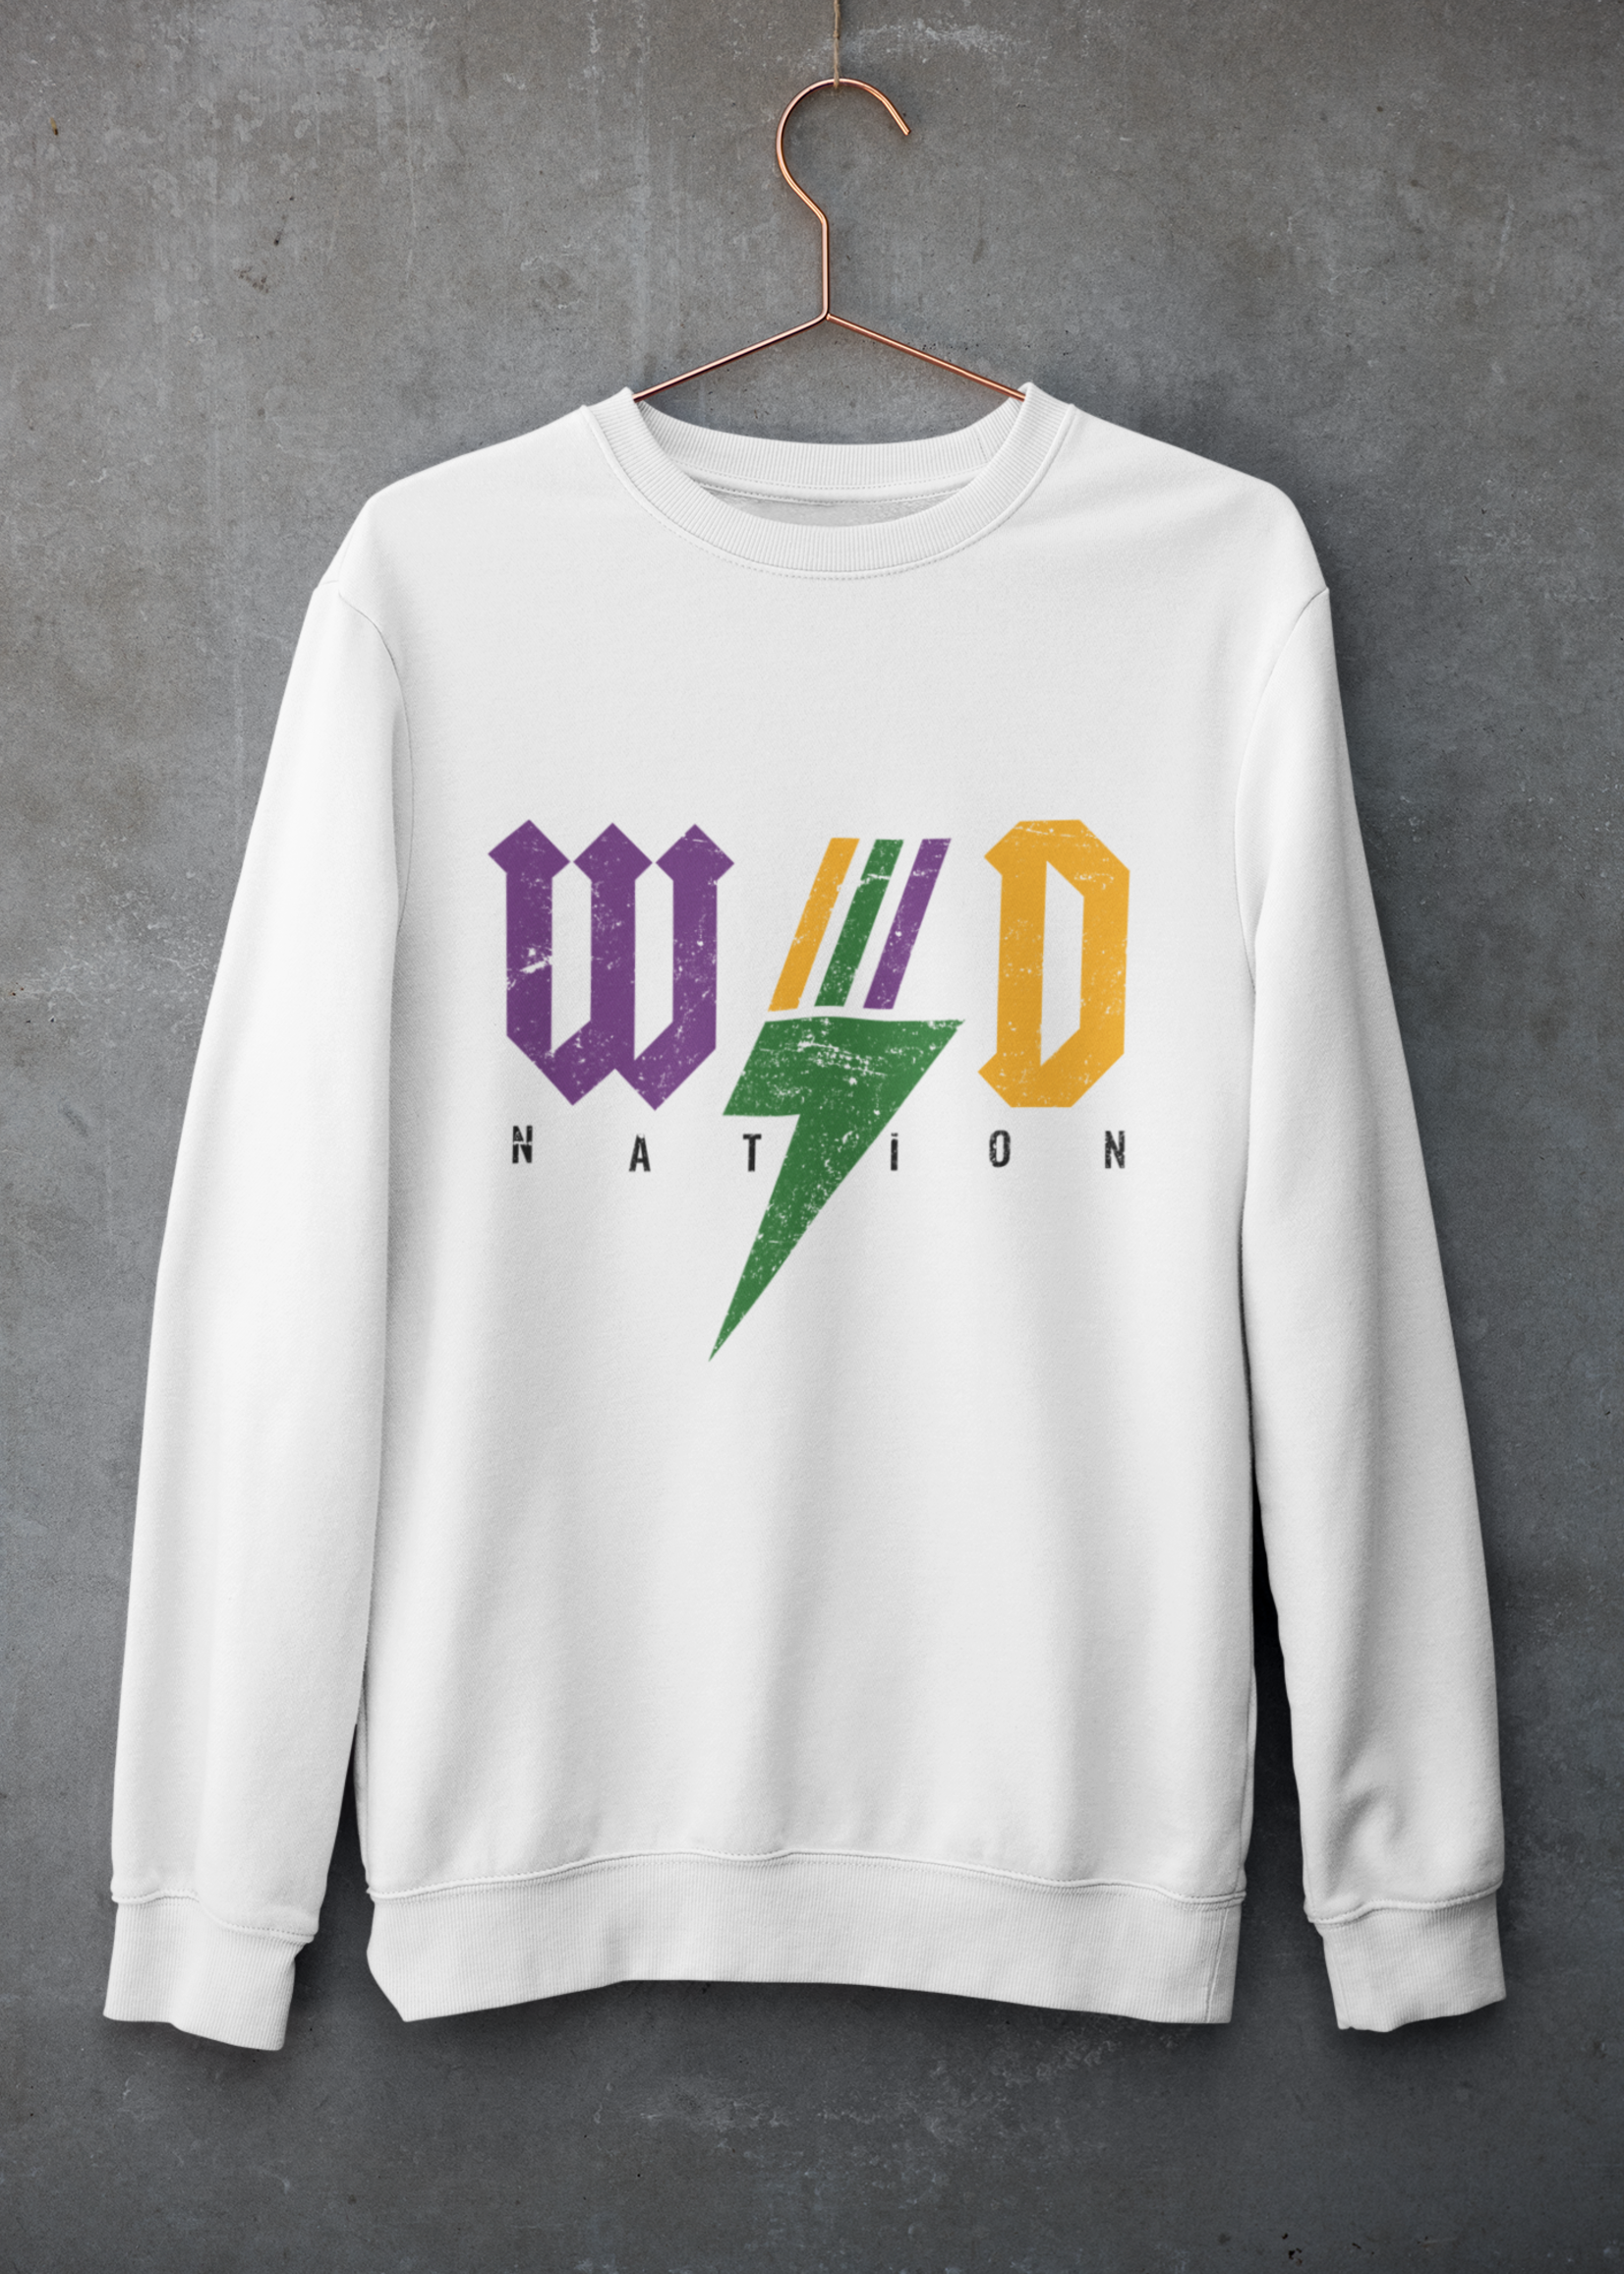 Natty Grace Original WD Nation Mardi Gras Rocker Unisex Sweatshirt